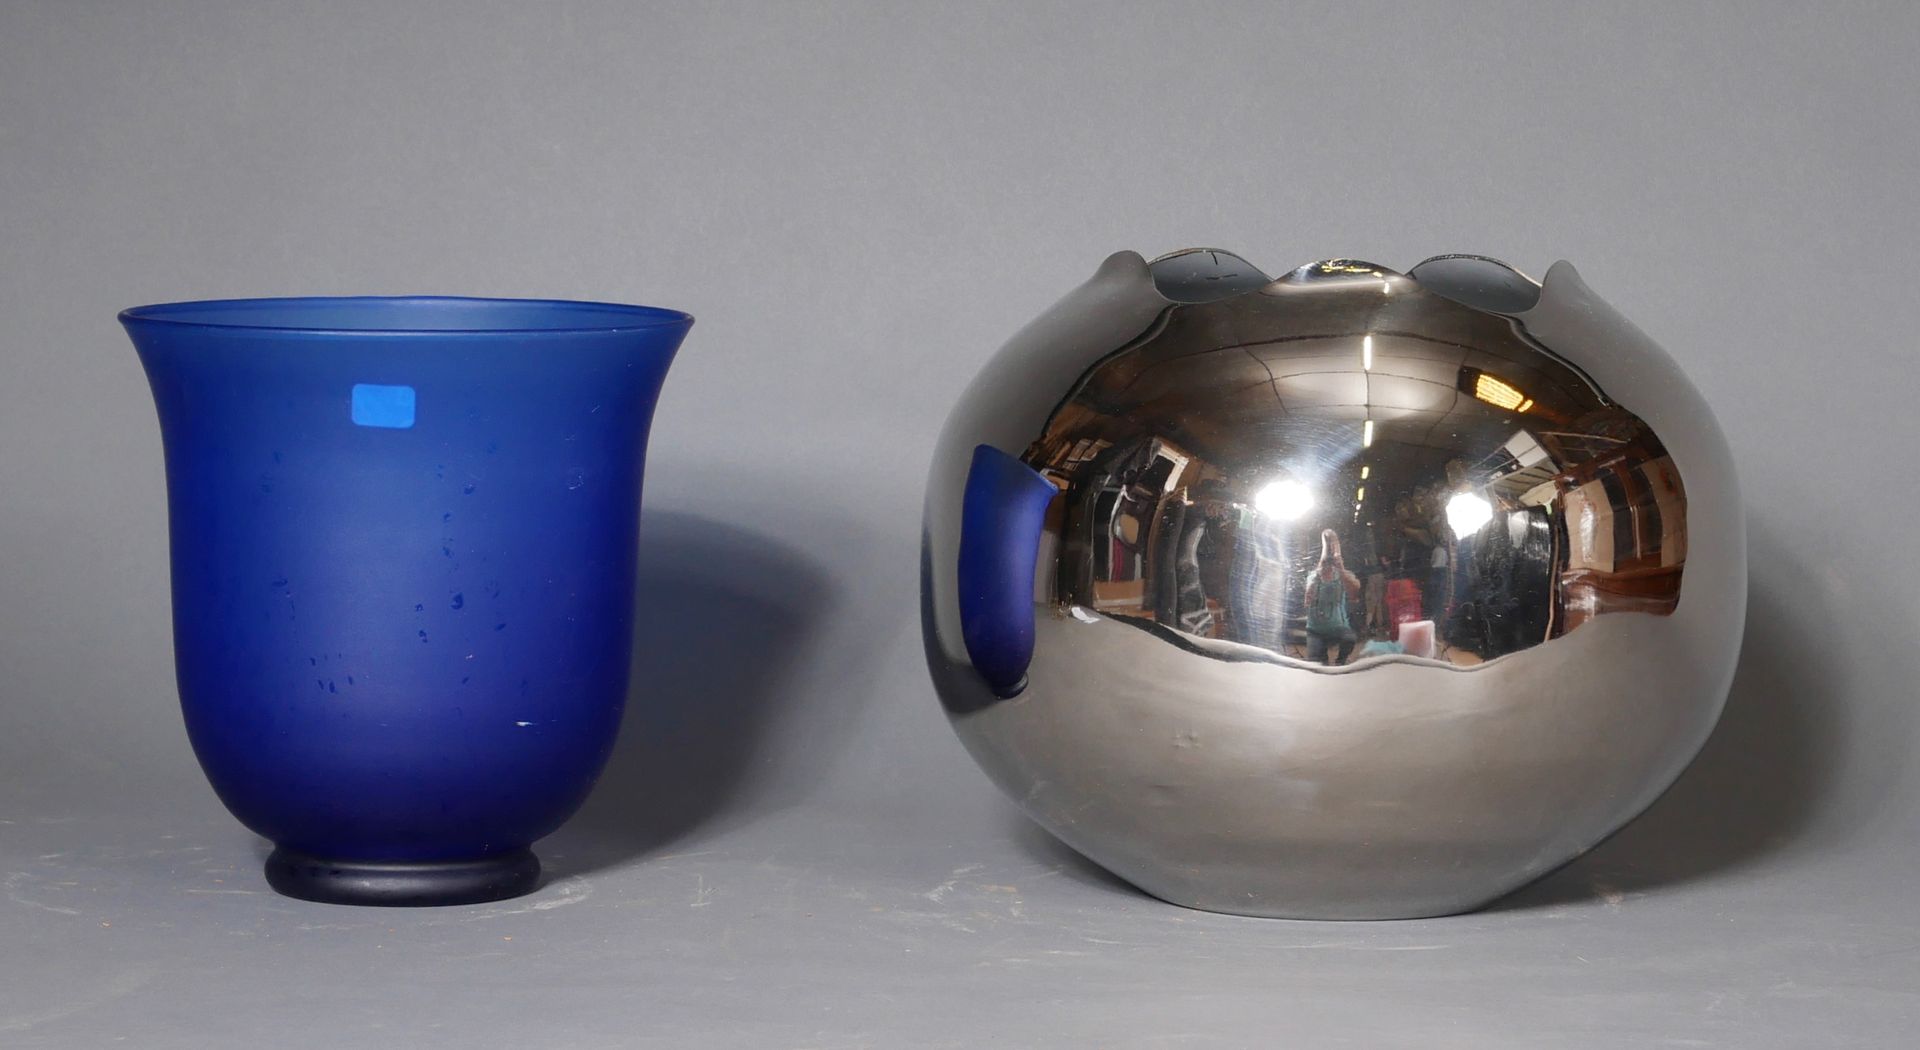 Null 两个金属和蓝色有色玻璃的锅盖

高：22-25厘米。